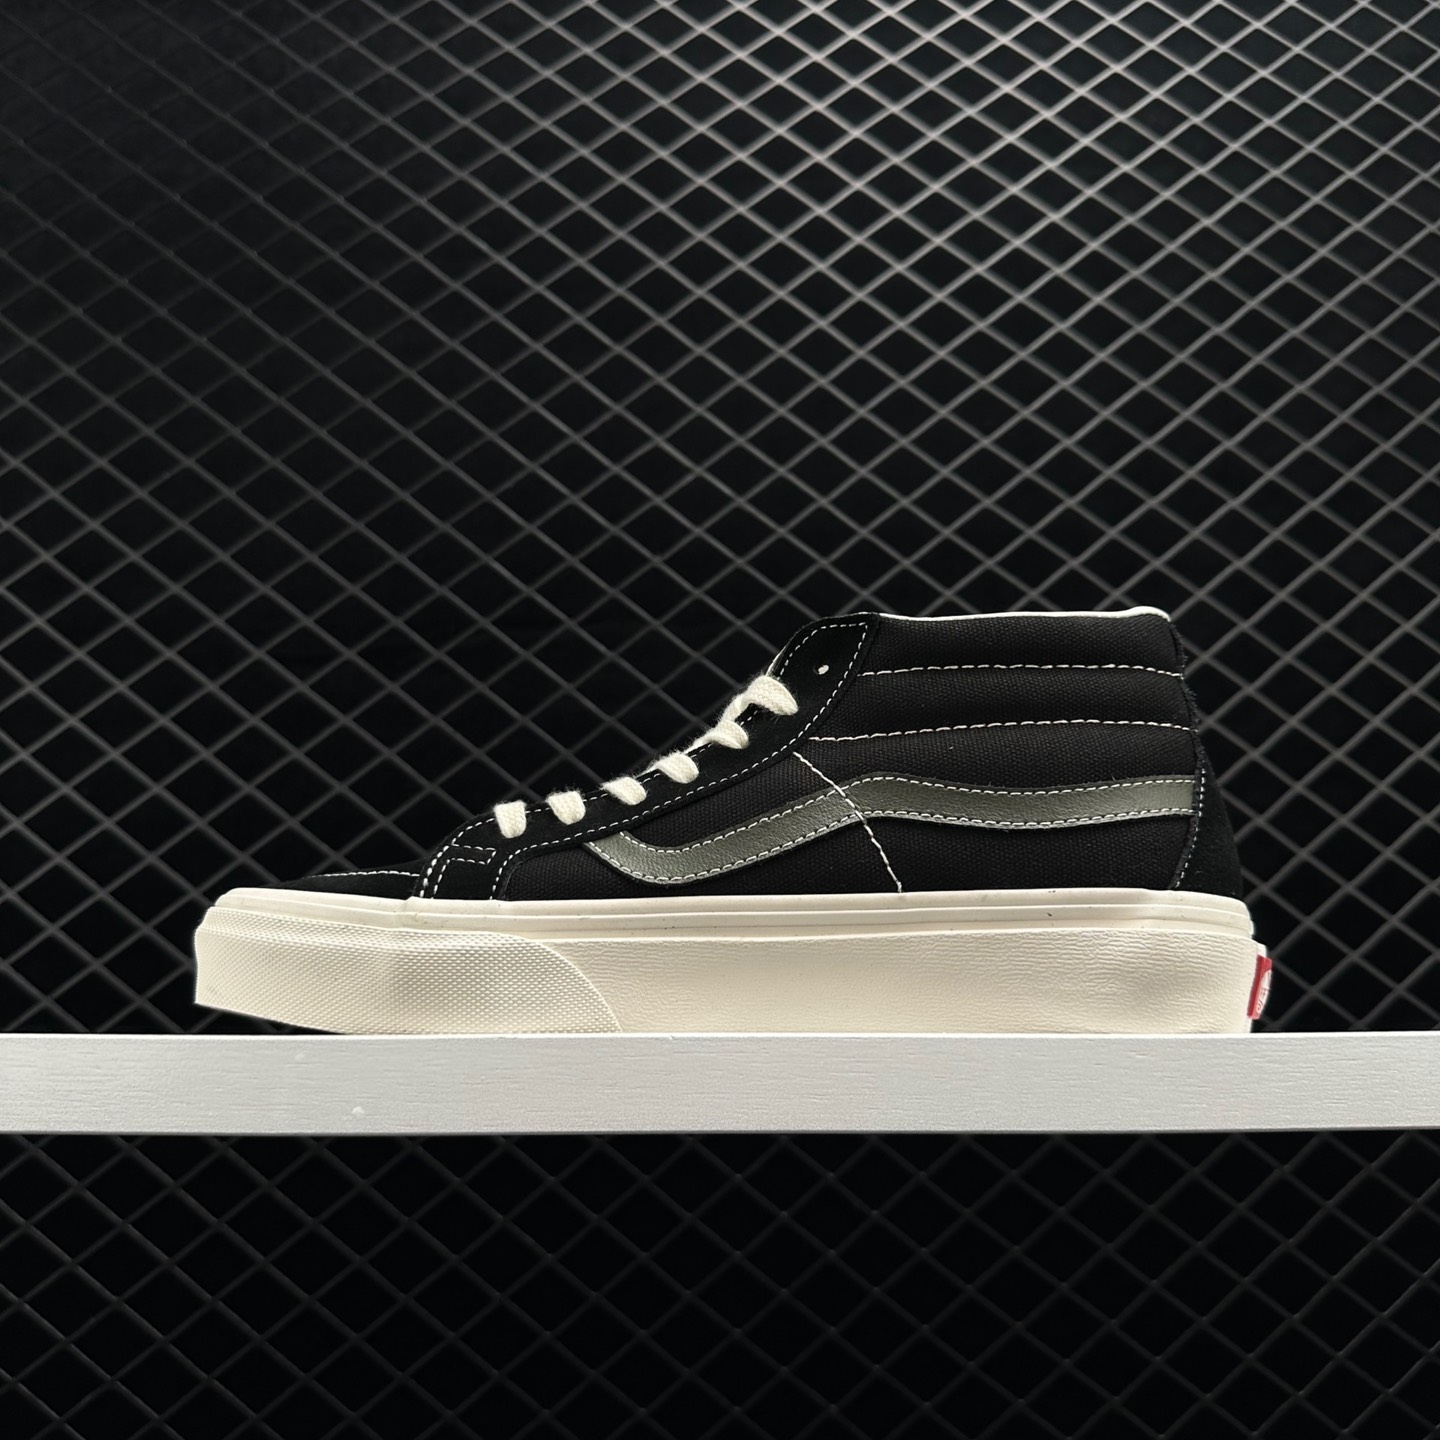 Vans SK8-Mid Pro Black - Durable & Stylish Skate Shoes